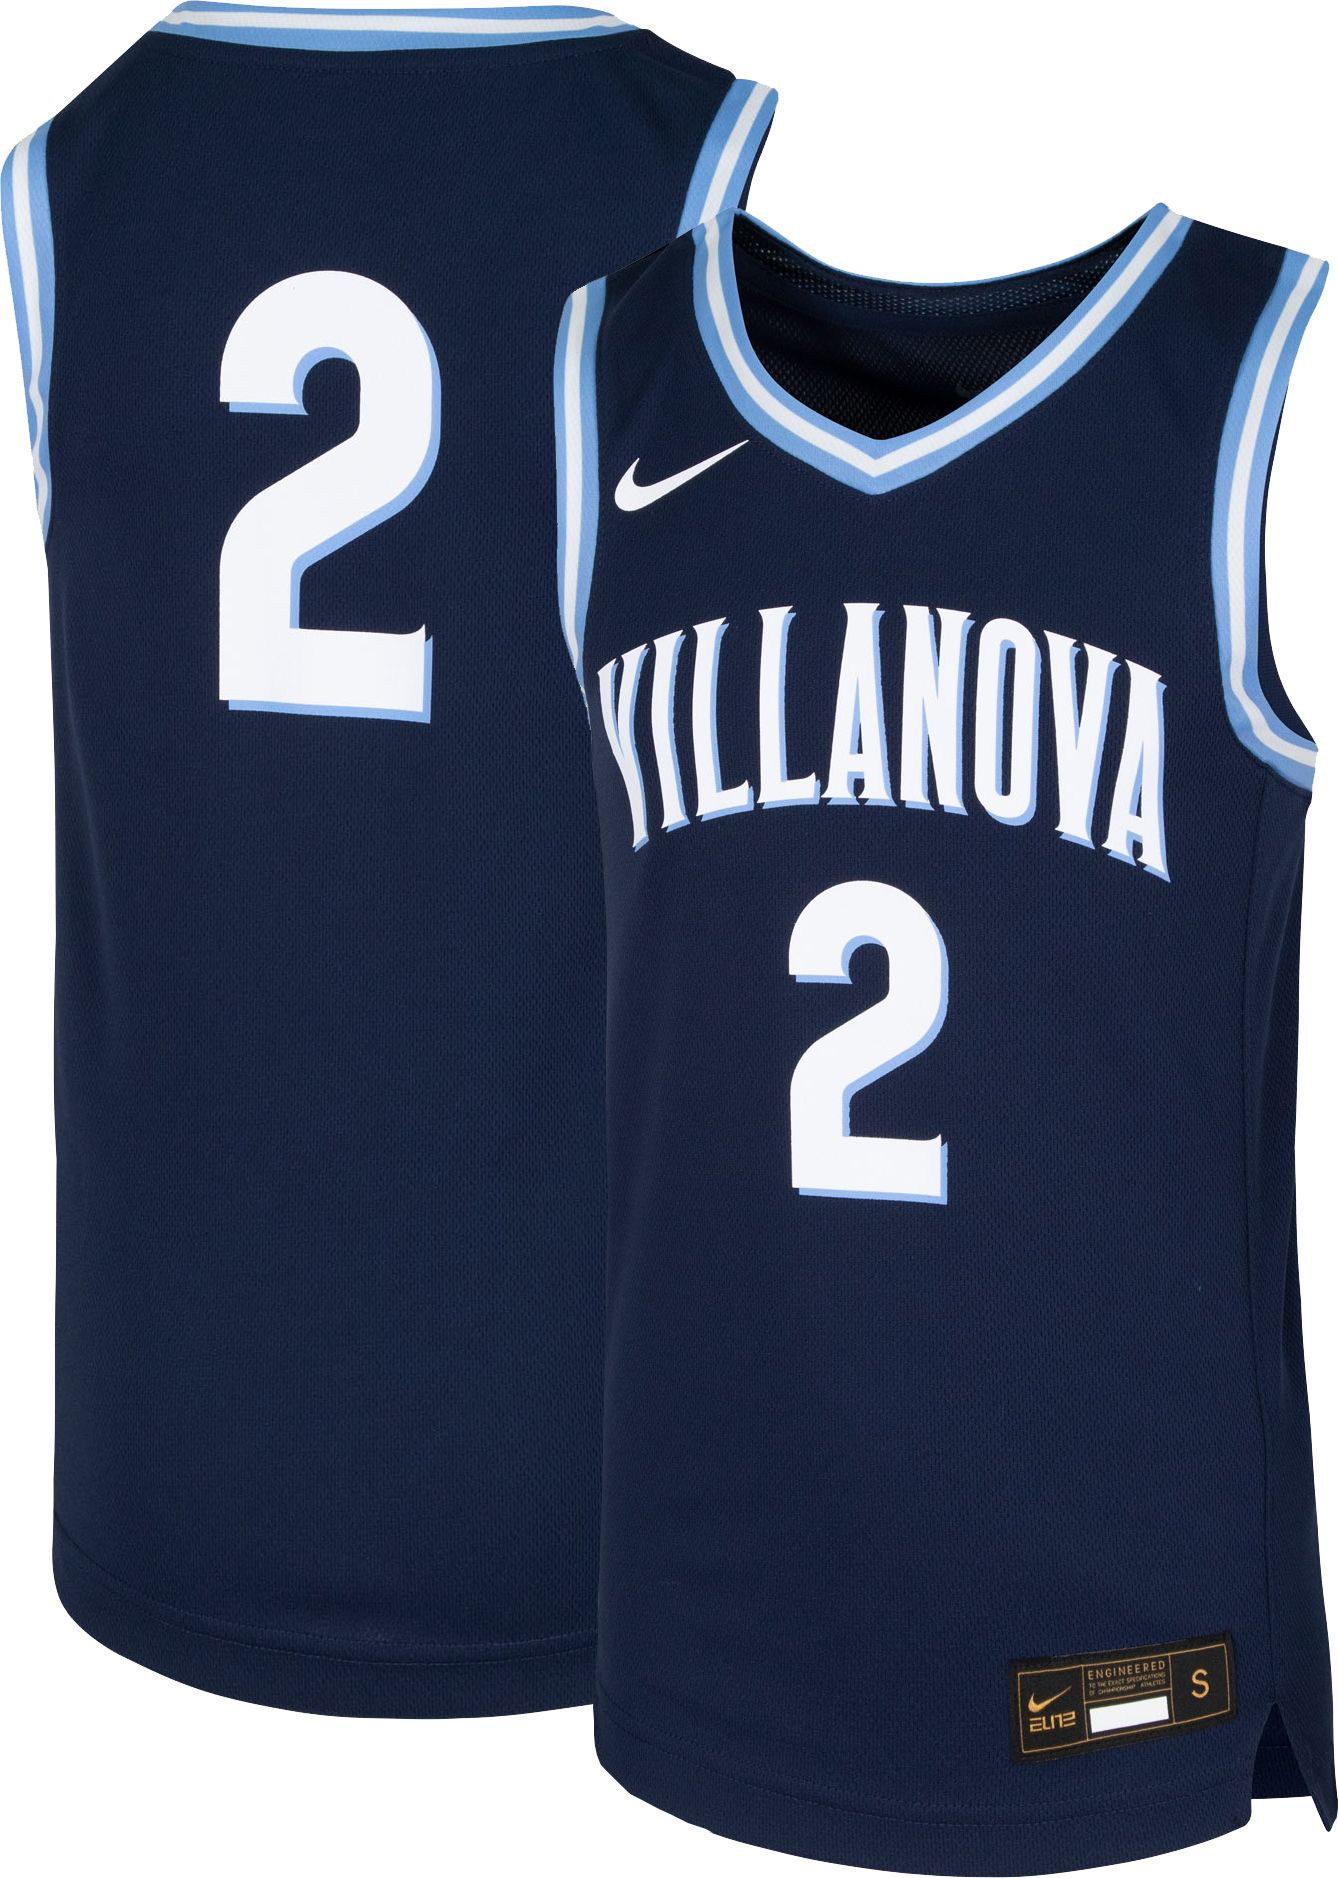 villanova basketball jersey authentic